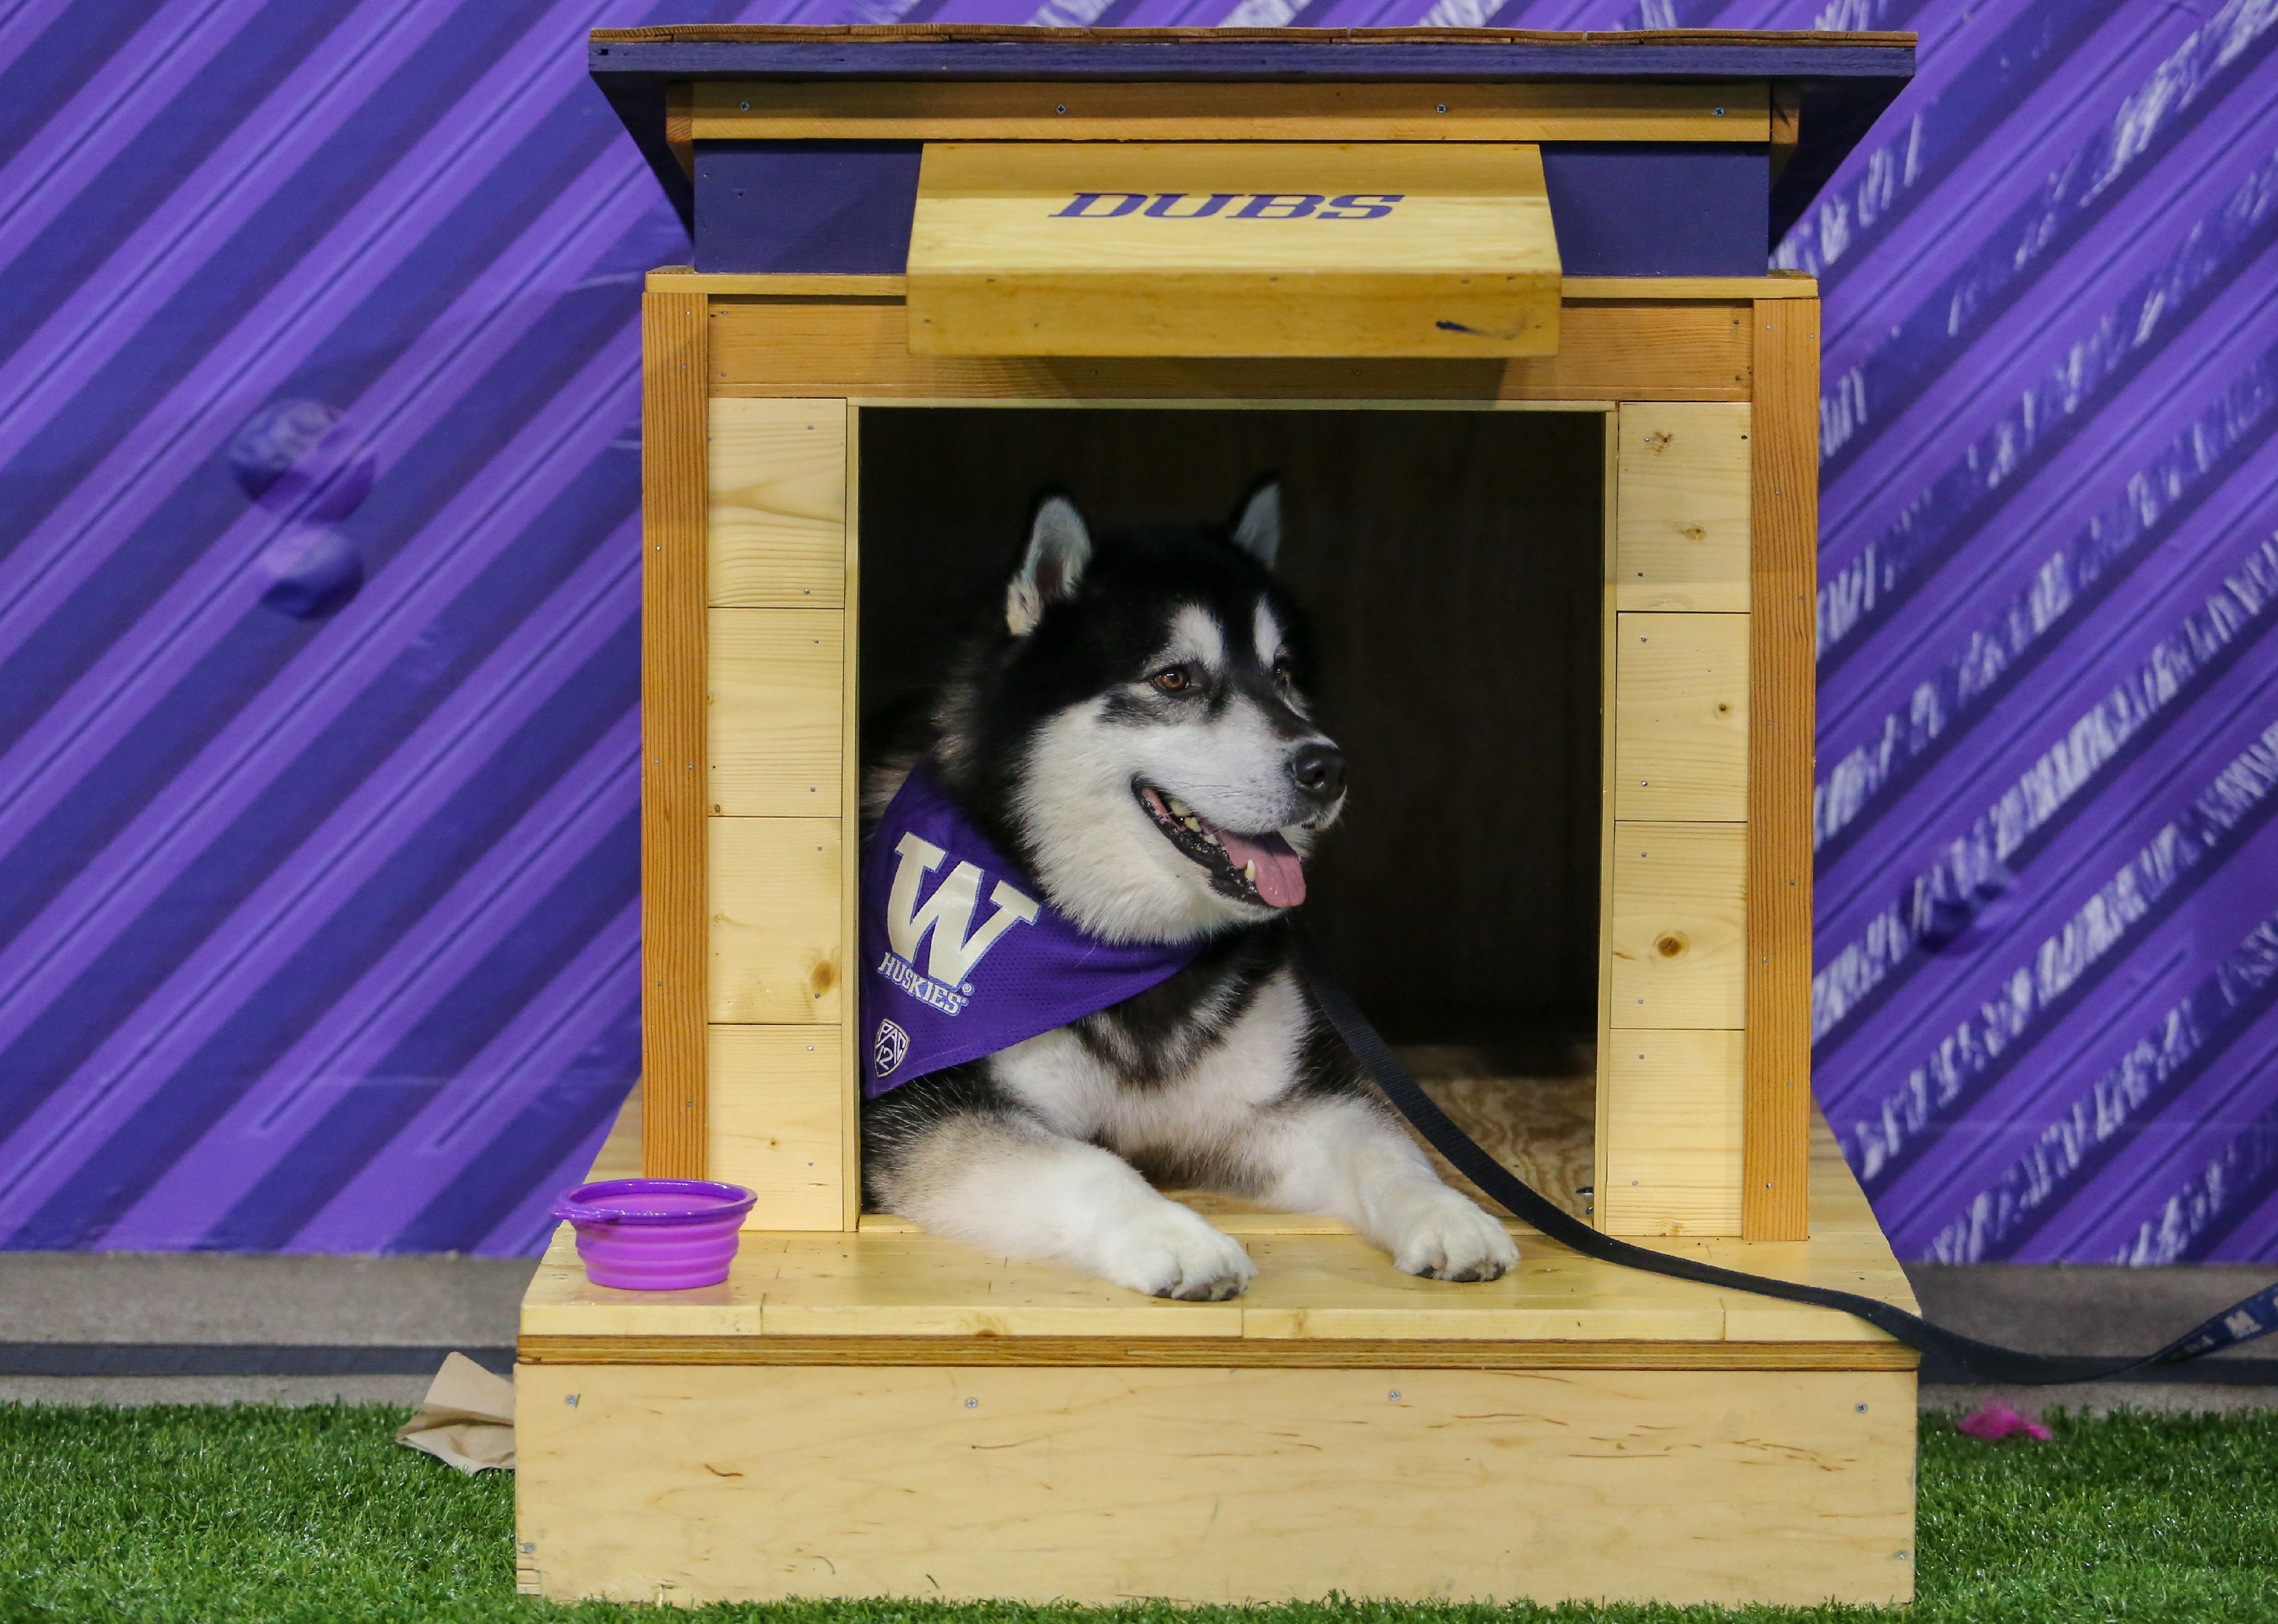  Washington Huskies mascot Dubs II sits in a dog house.